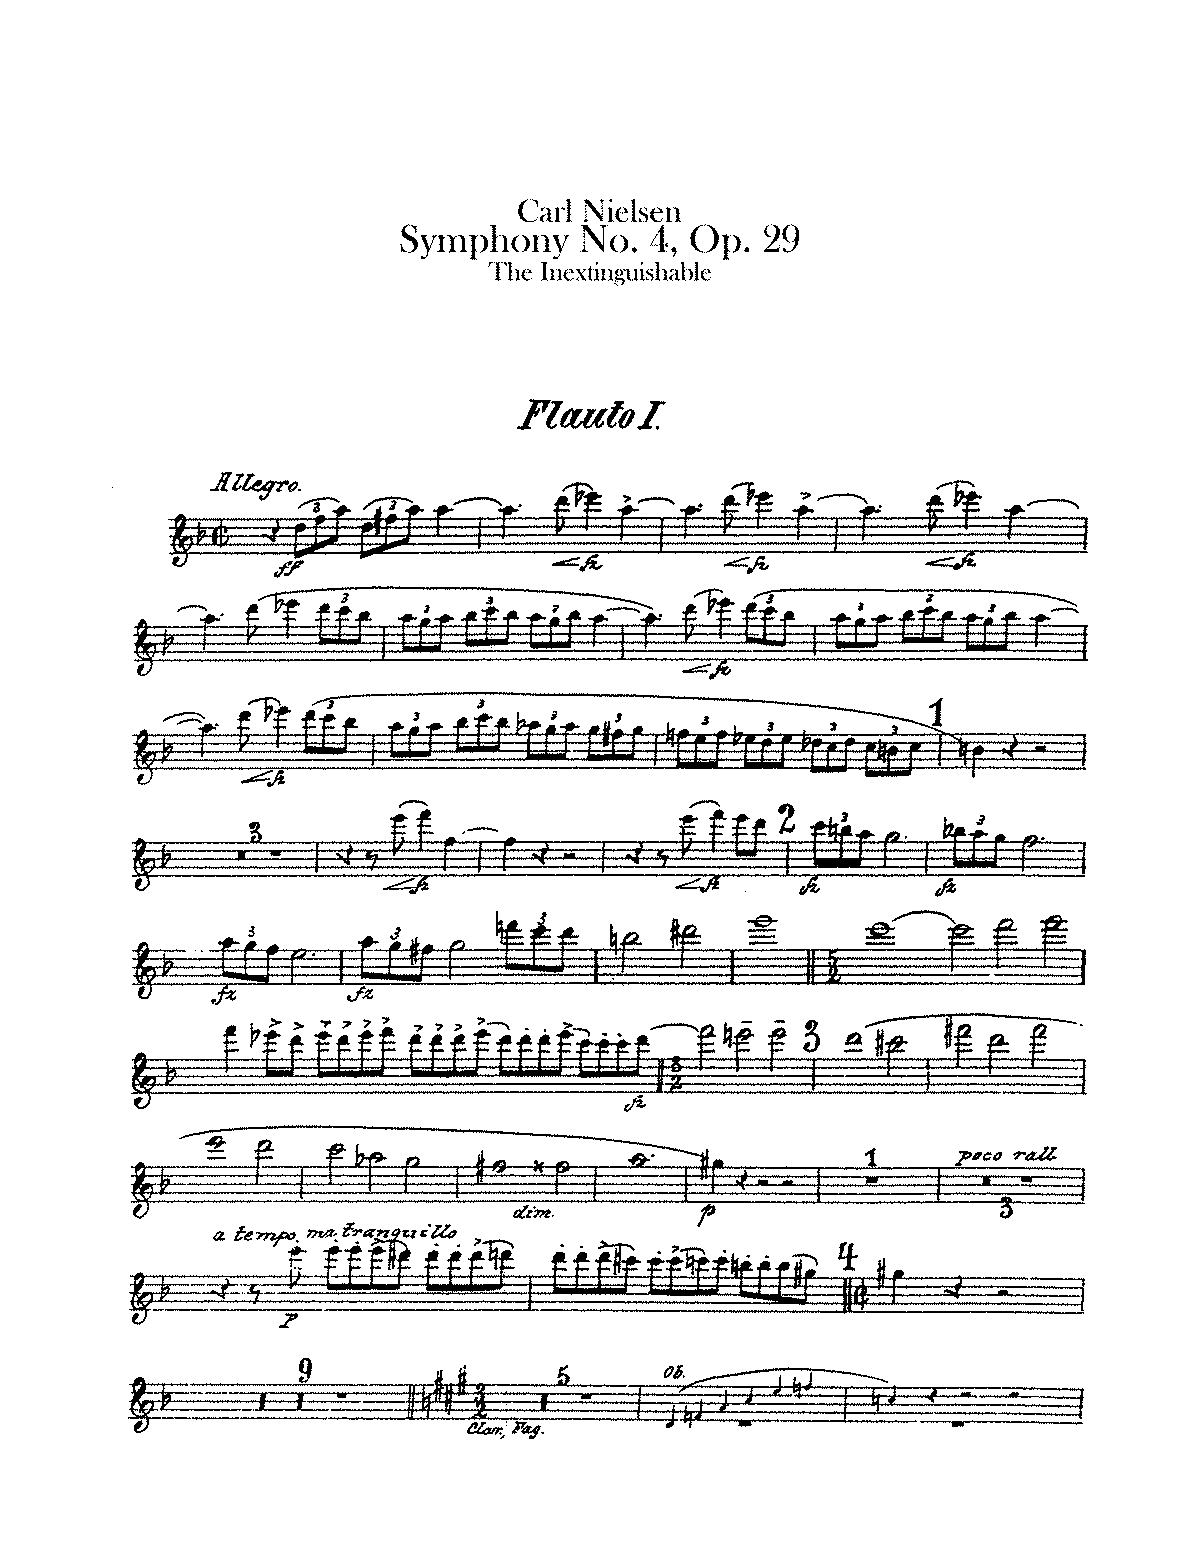 Symphony No.4, Op.29 (Nielsen, Carl) - IMSLP